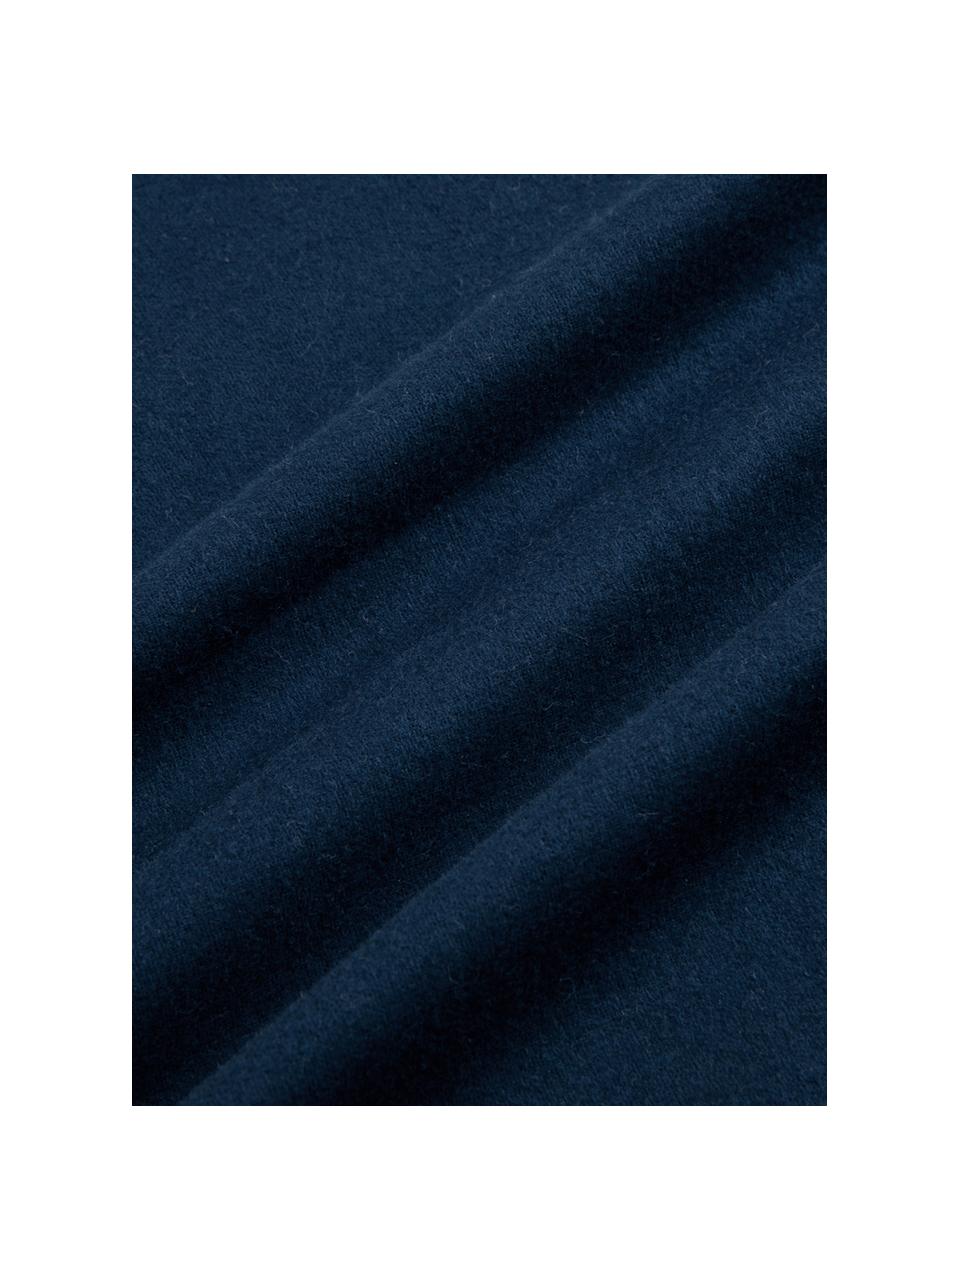 Flanell-Kissenbezüge Erica in Dunkelblau, 2 Stück, Webart: Flanell, Navyblau, B 40 x L 80 cm